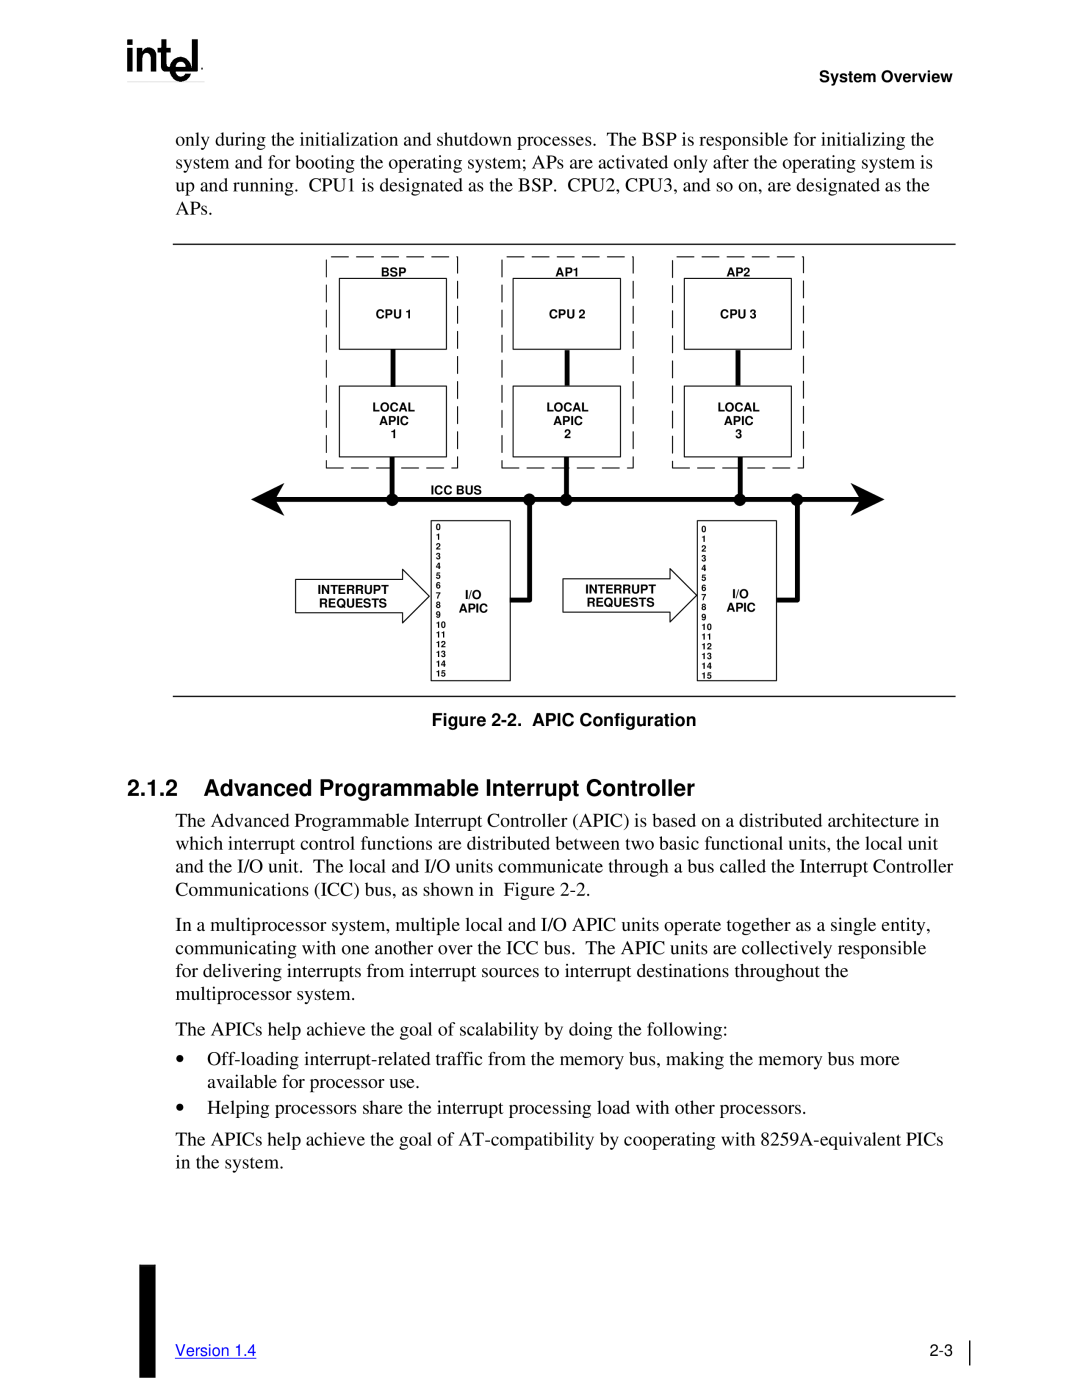 Intel MultiProcessor manual 2.1.2Advanced Programmable Interrupt Controller, 2.APIC Configuration 